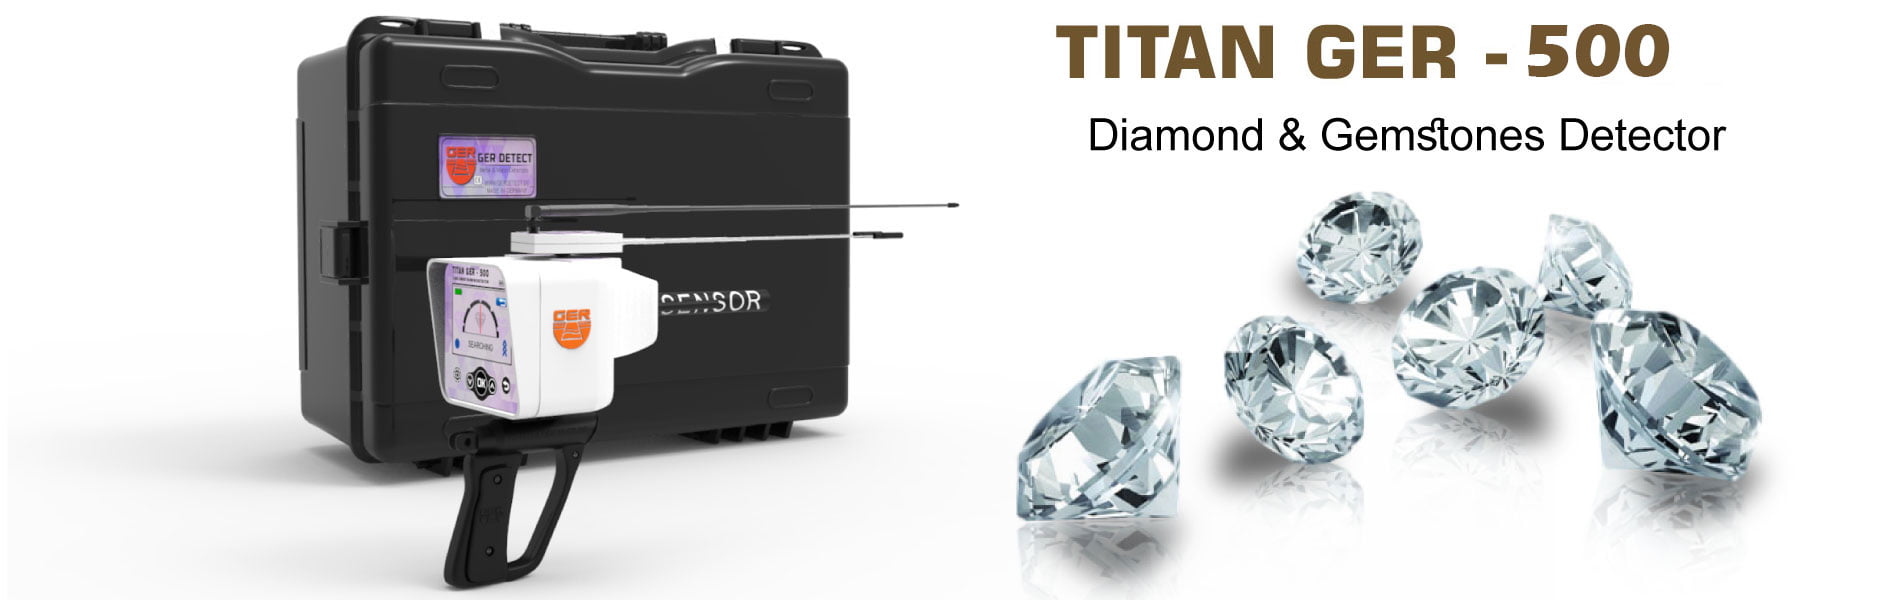 titan-ger-500-device-diamond-gemstone-locator